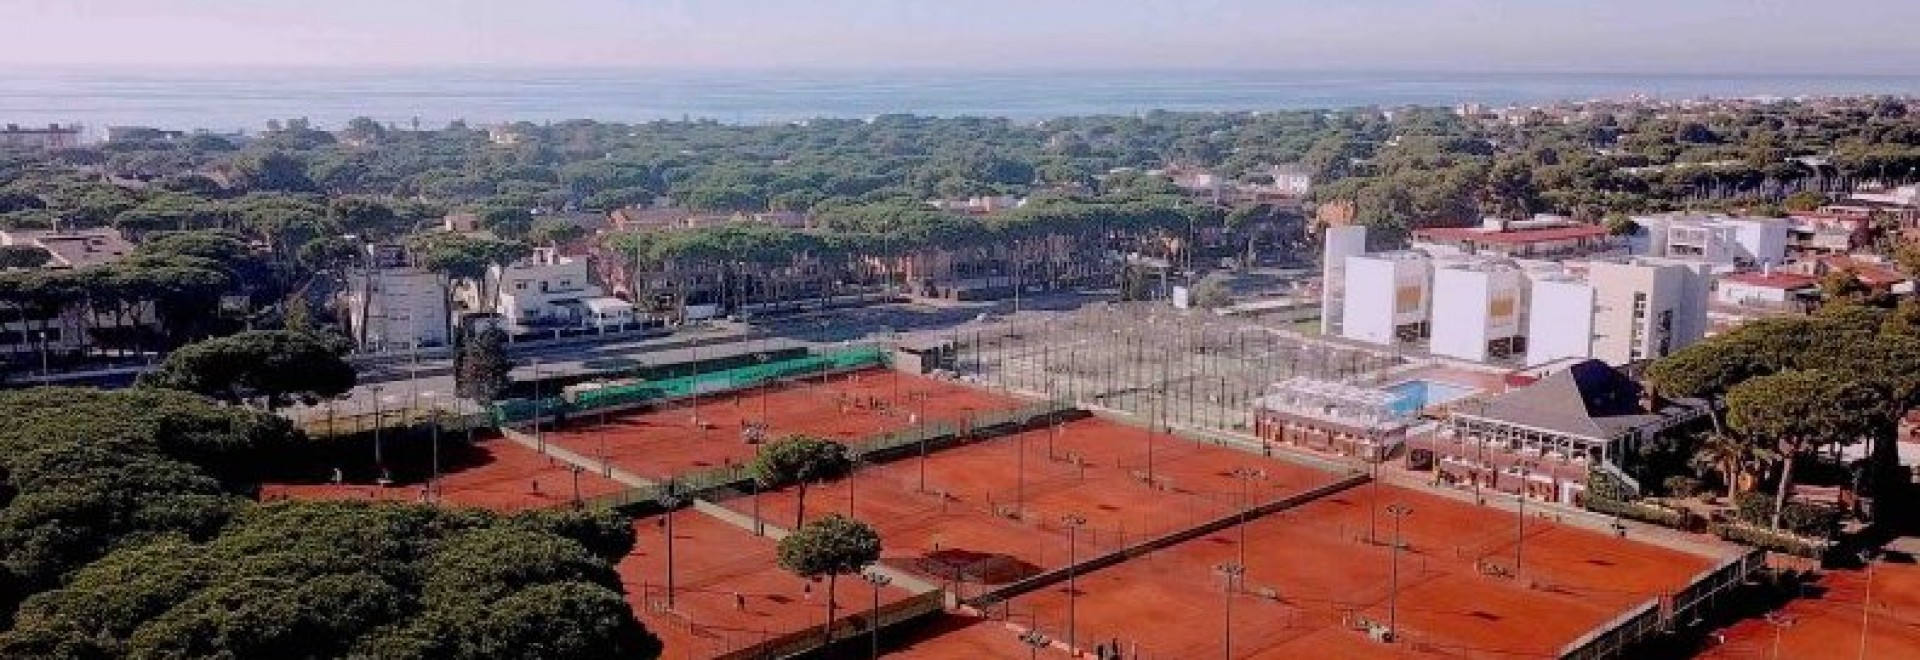 Elite Tennis Academy, Barcelona - Book. Travel. Play.